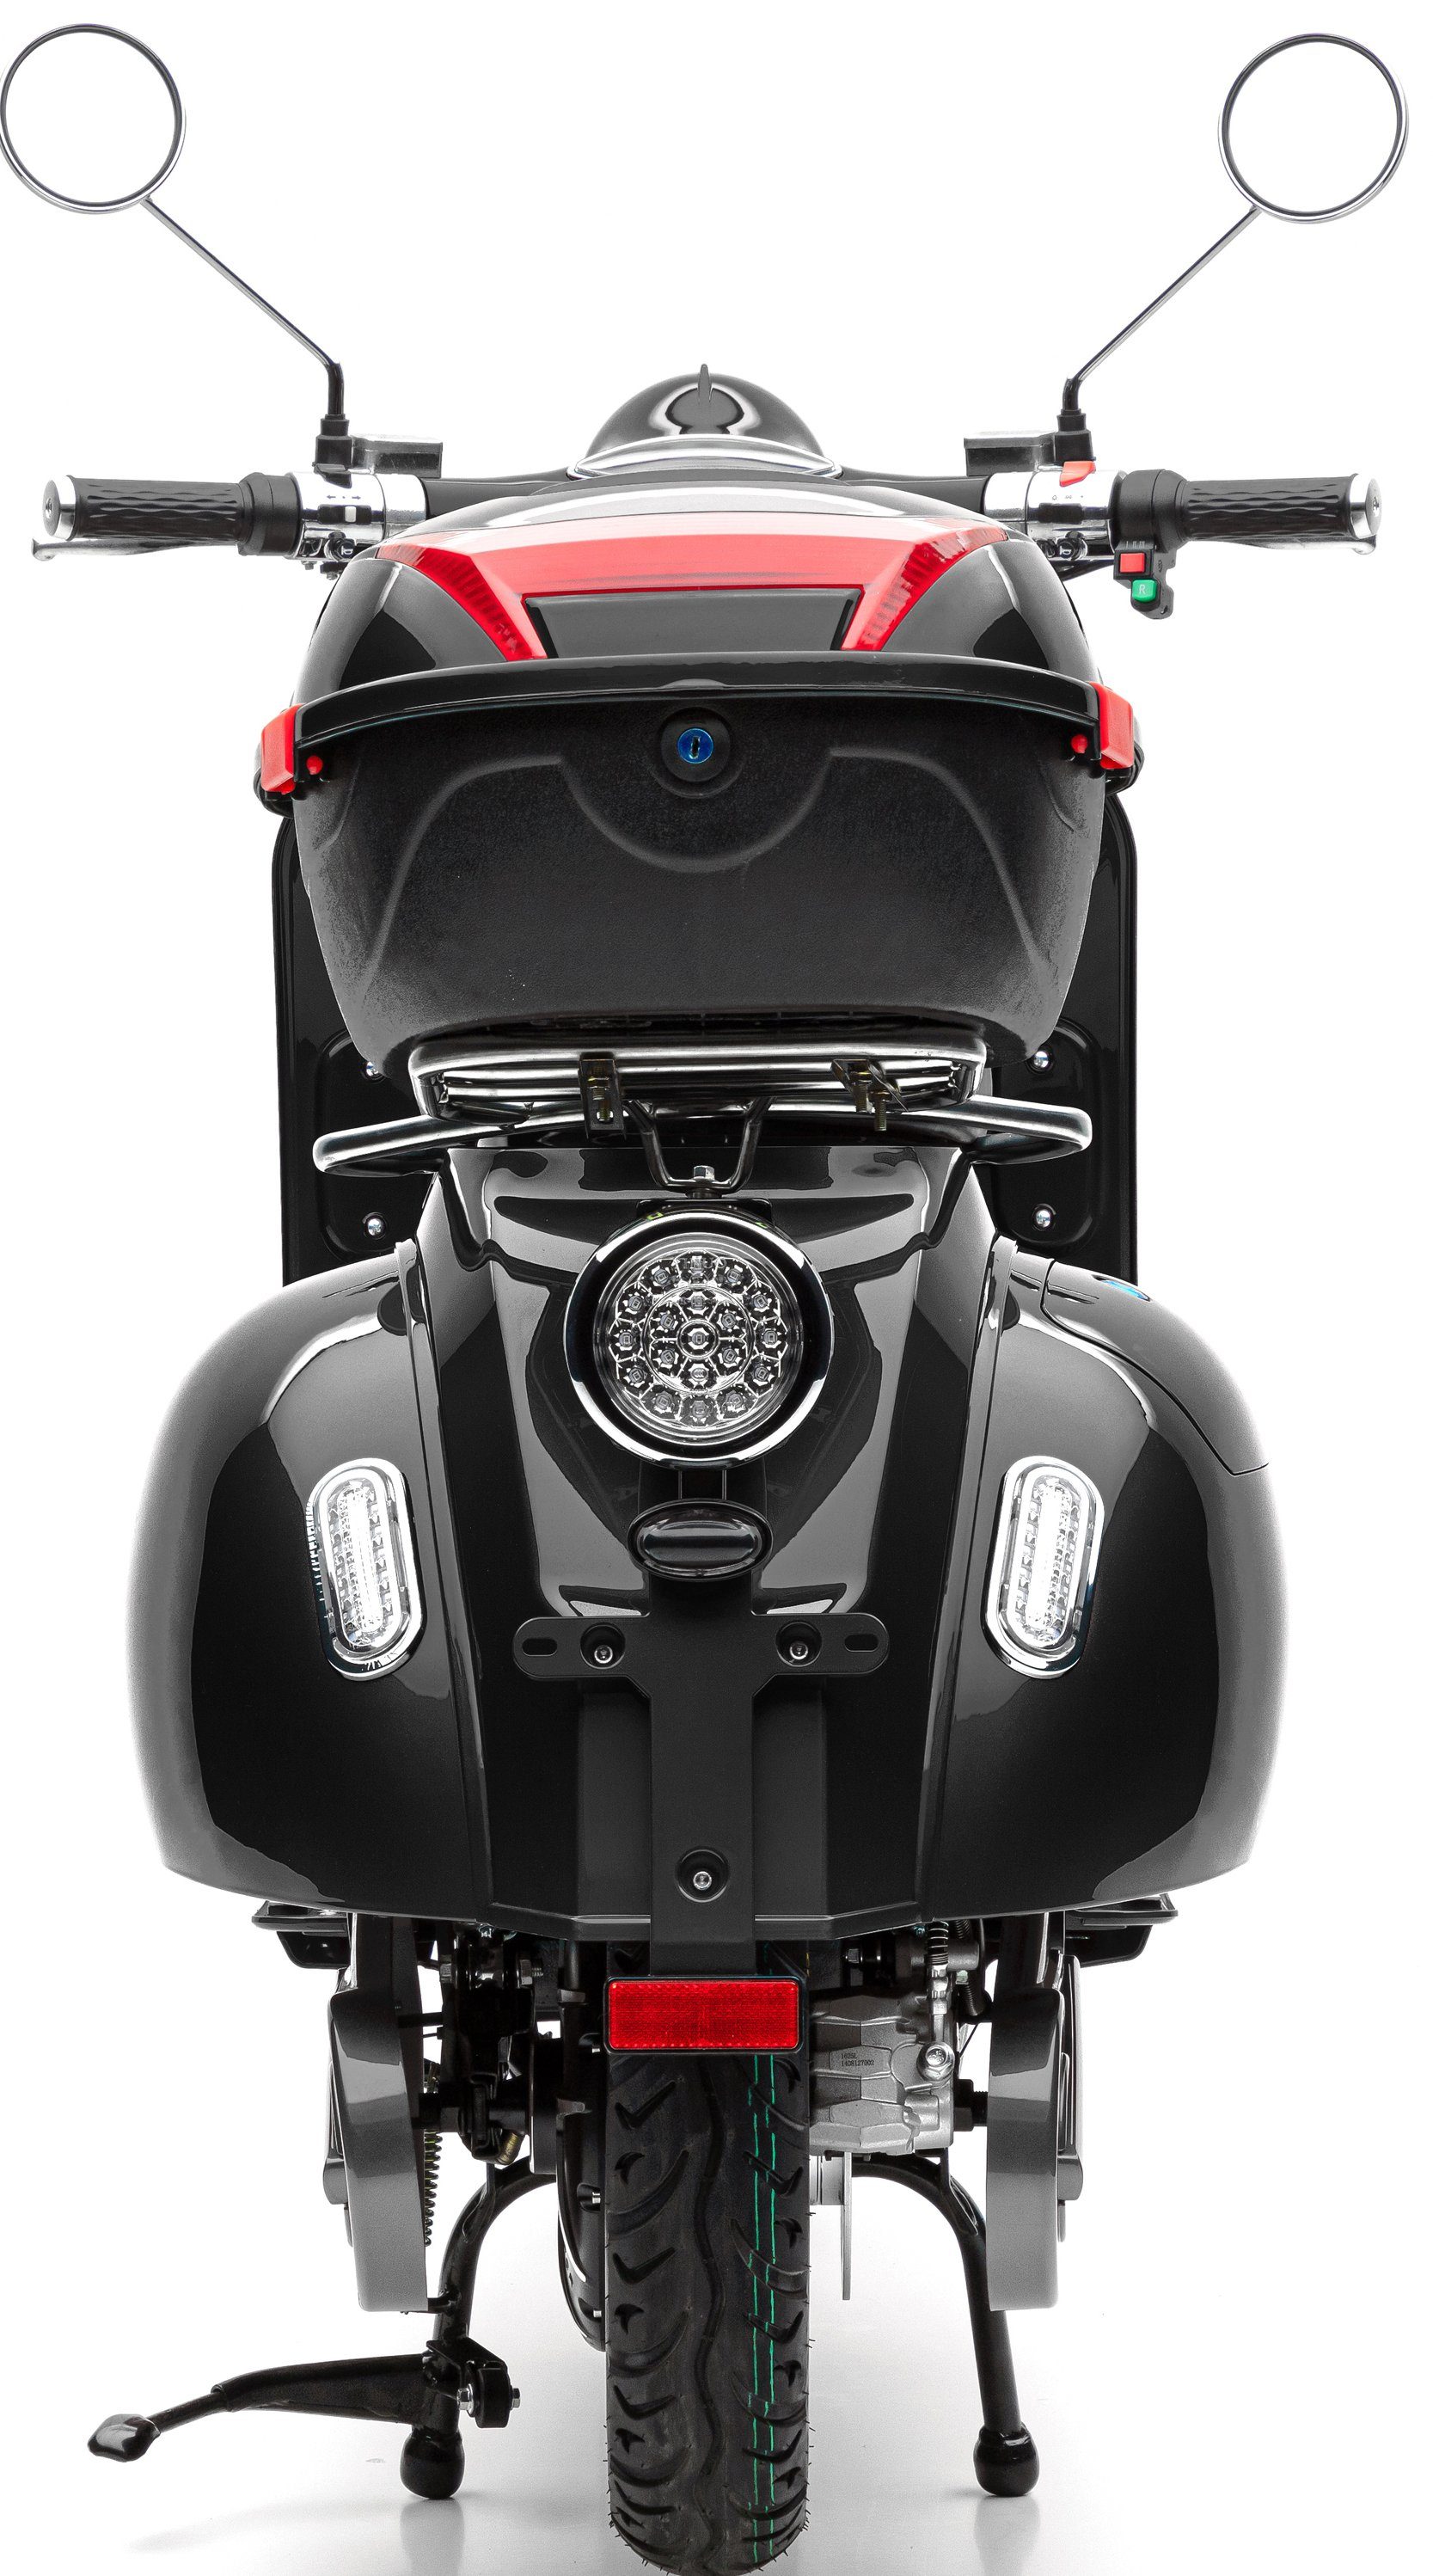 2000 ECONELO CLASSIC, 45 W, km/h, E-Motorroller schwarz Topcase;Alarmanlage